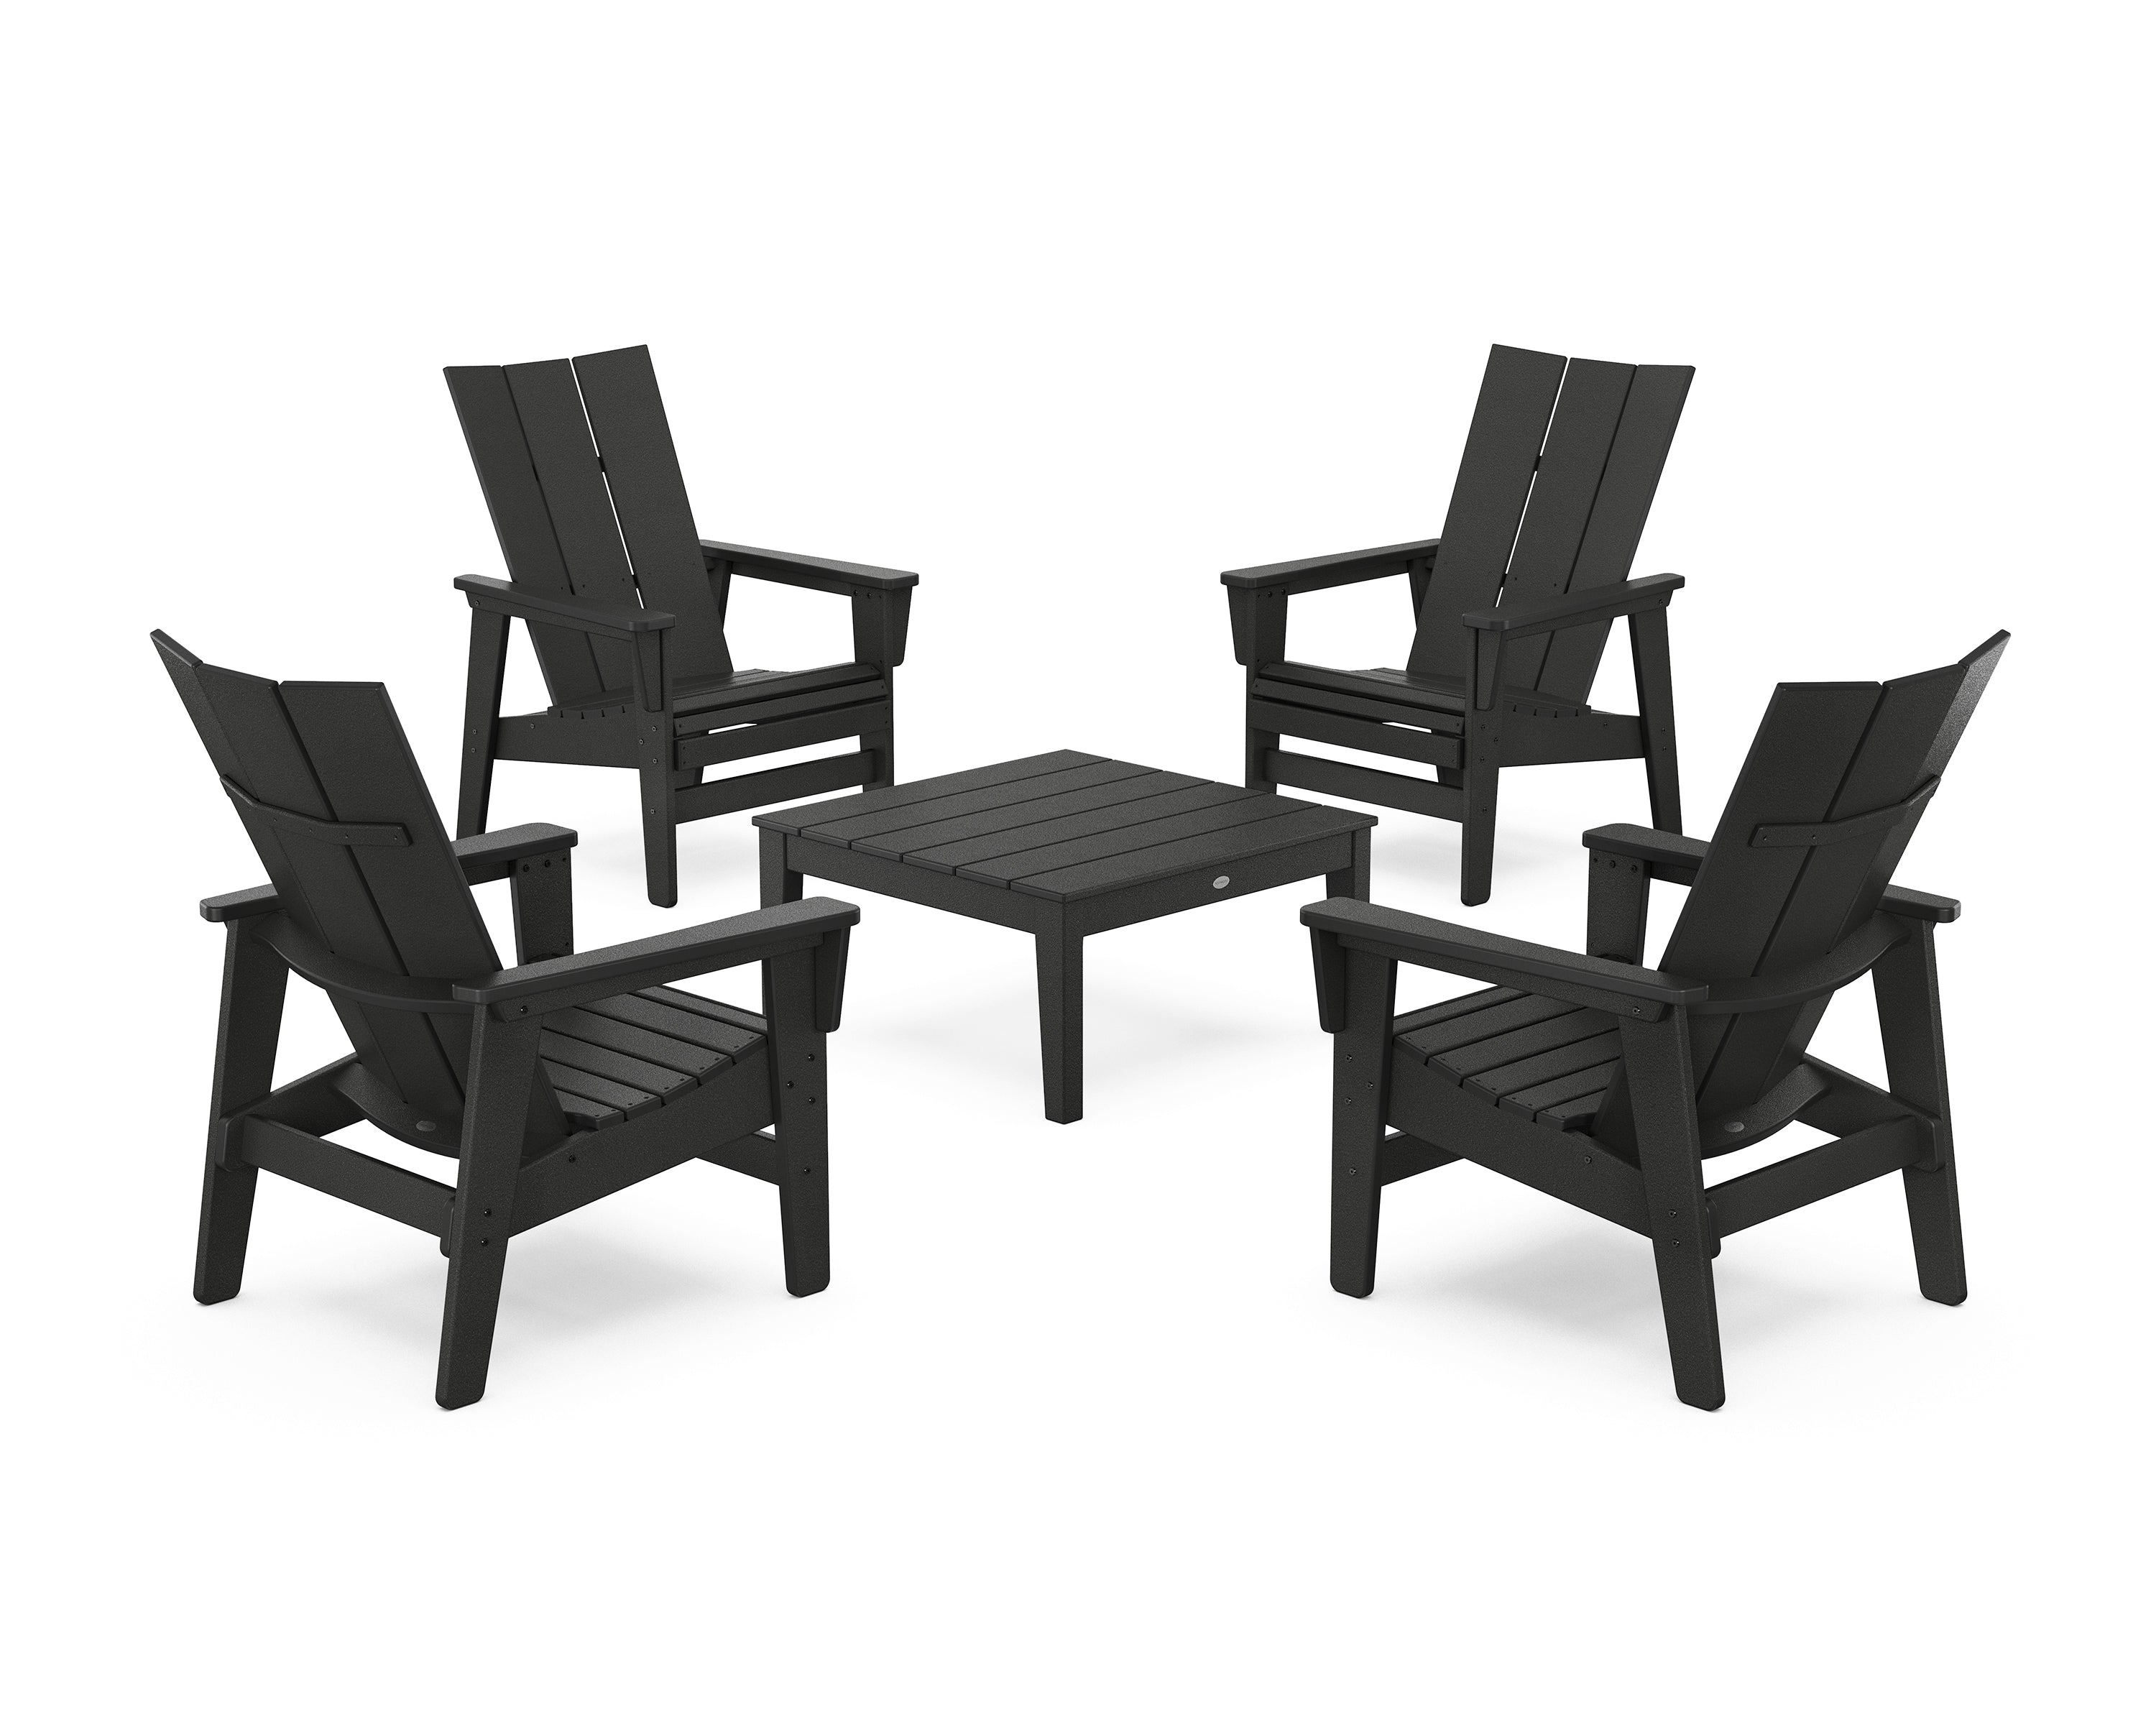 POLYWOOD® 5-Piece Modern Grand Upright Adirondack Chair Conversation Group in Black